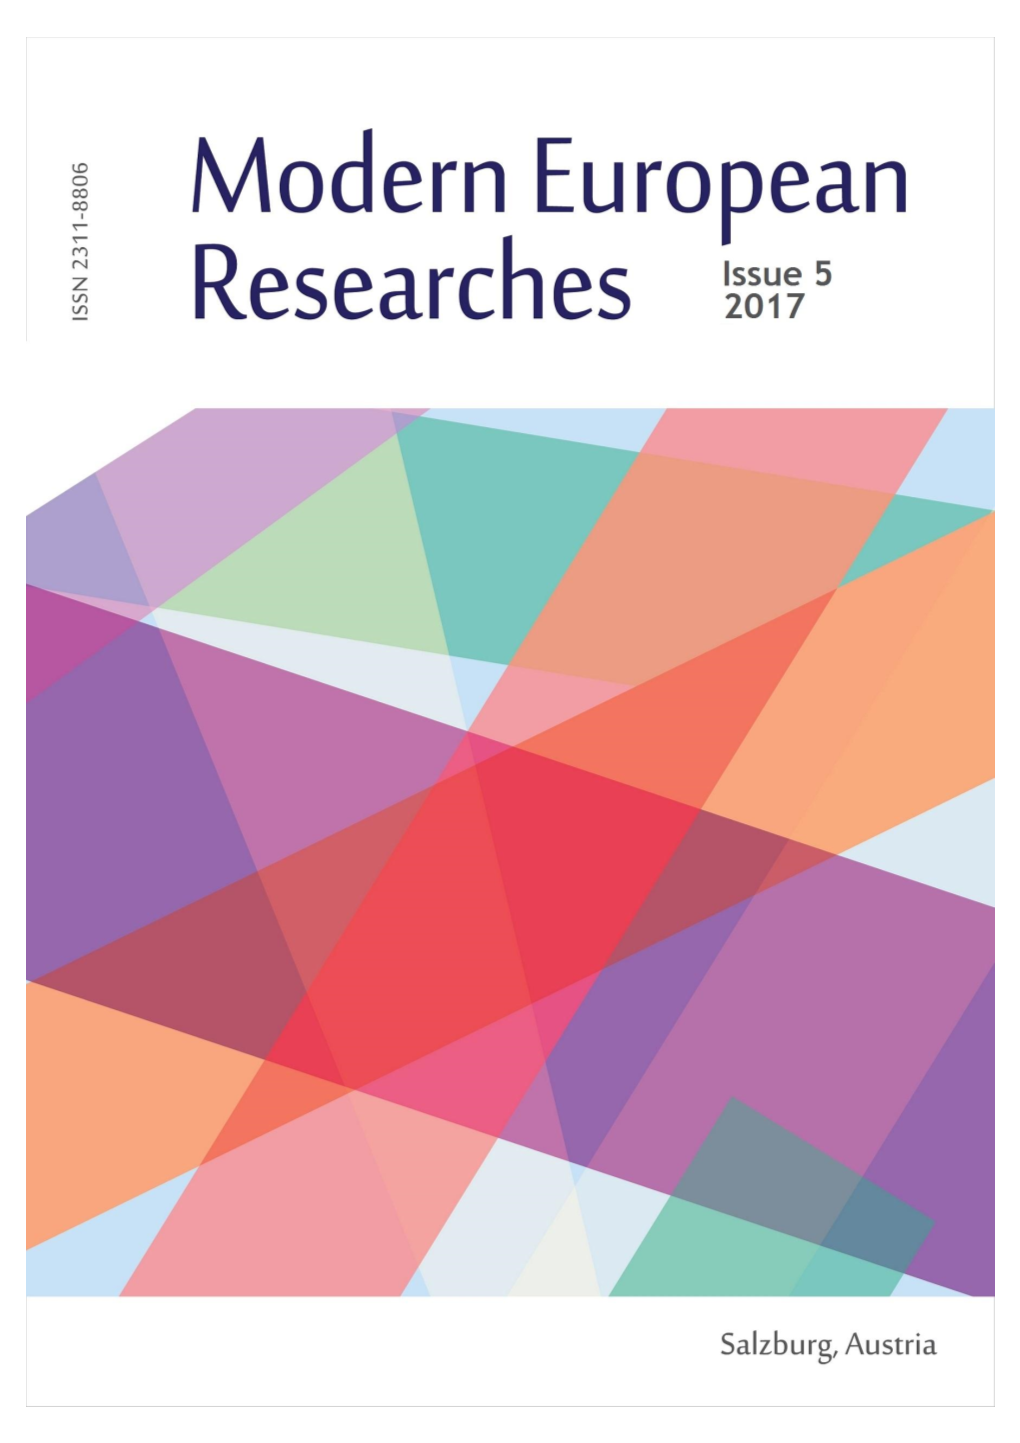 Modern European Researches (2017) Issue 5, 87 P